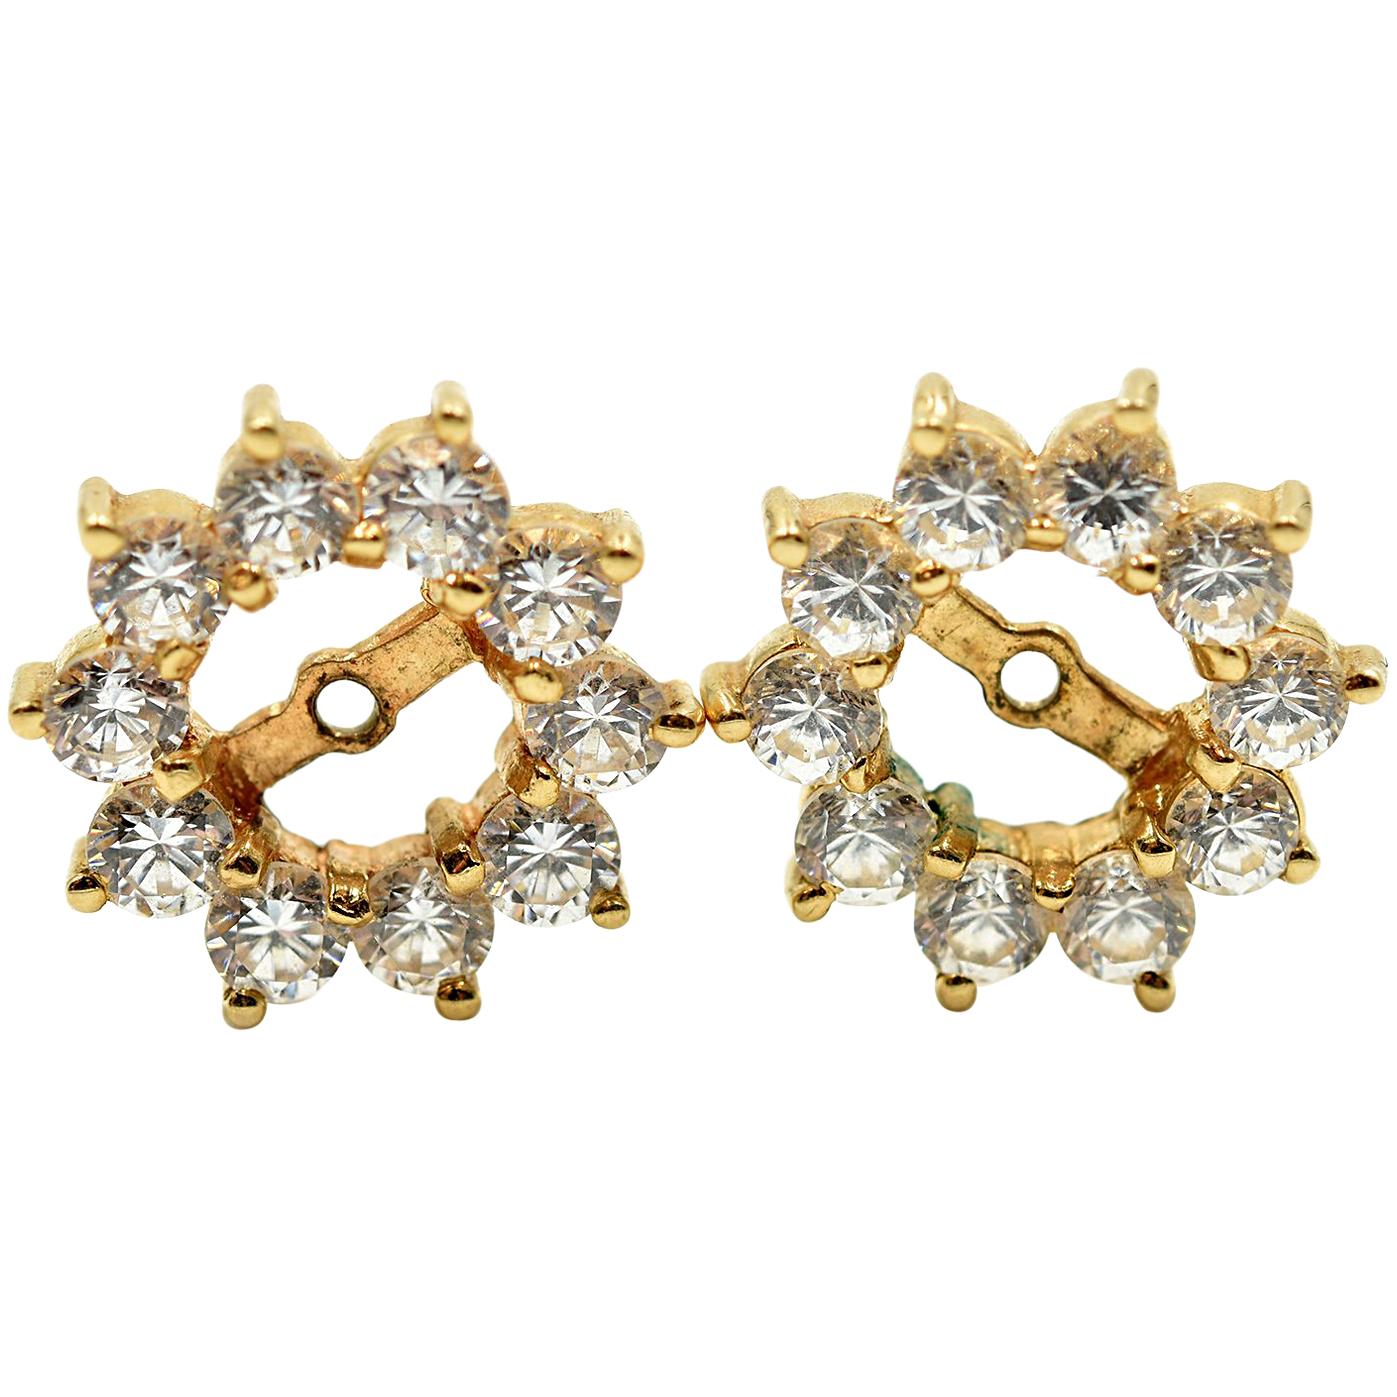 Diamond Earring Jackets 14 Karat Yellow Gold